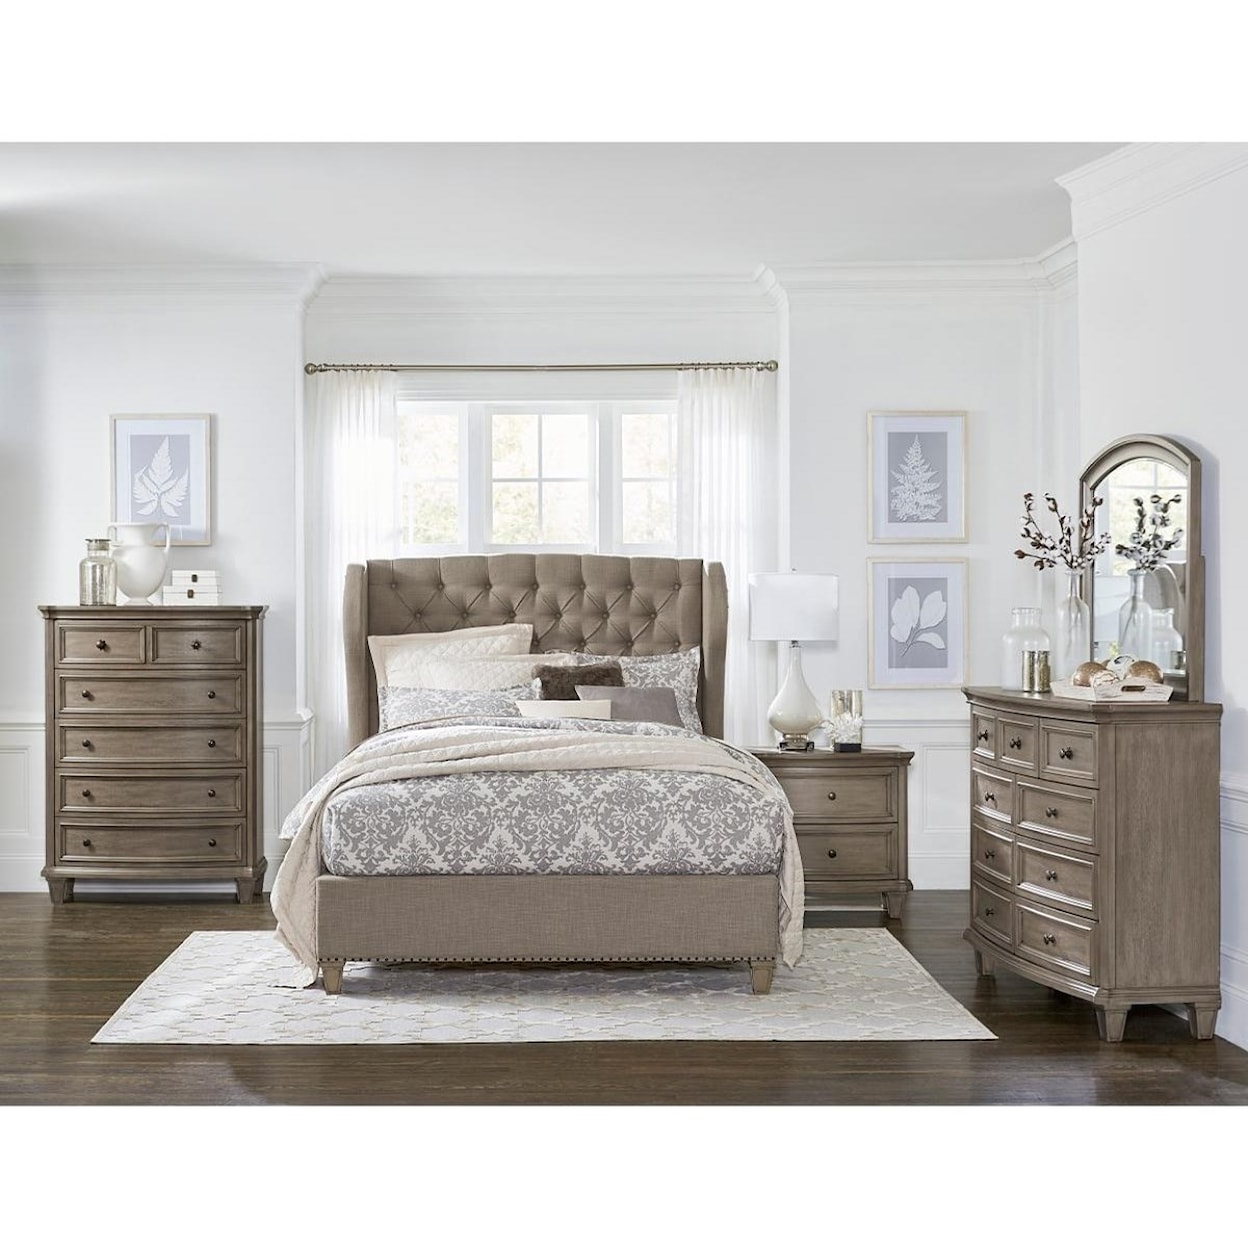 Homelegance Furniture Vermillion California King Bedroom Group